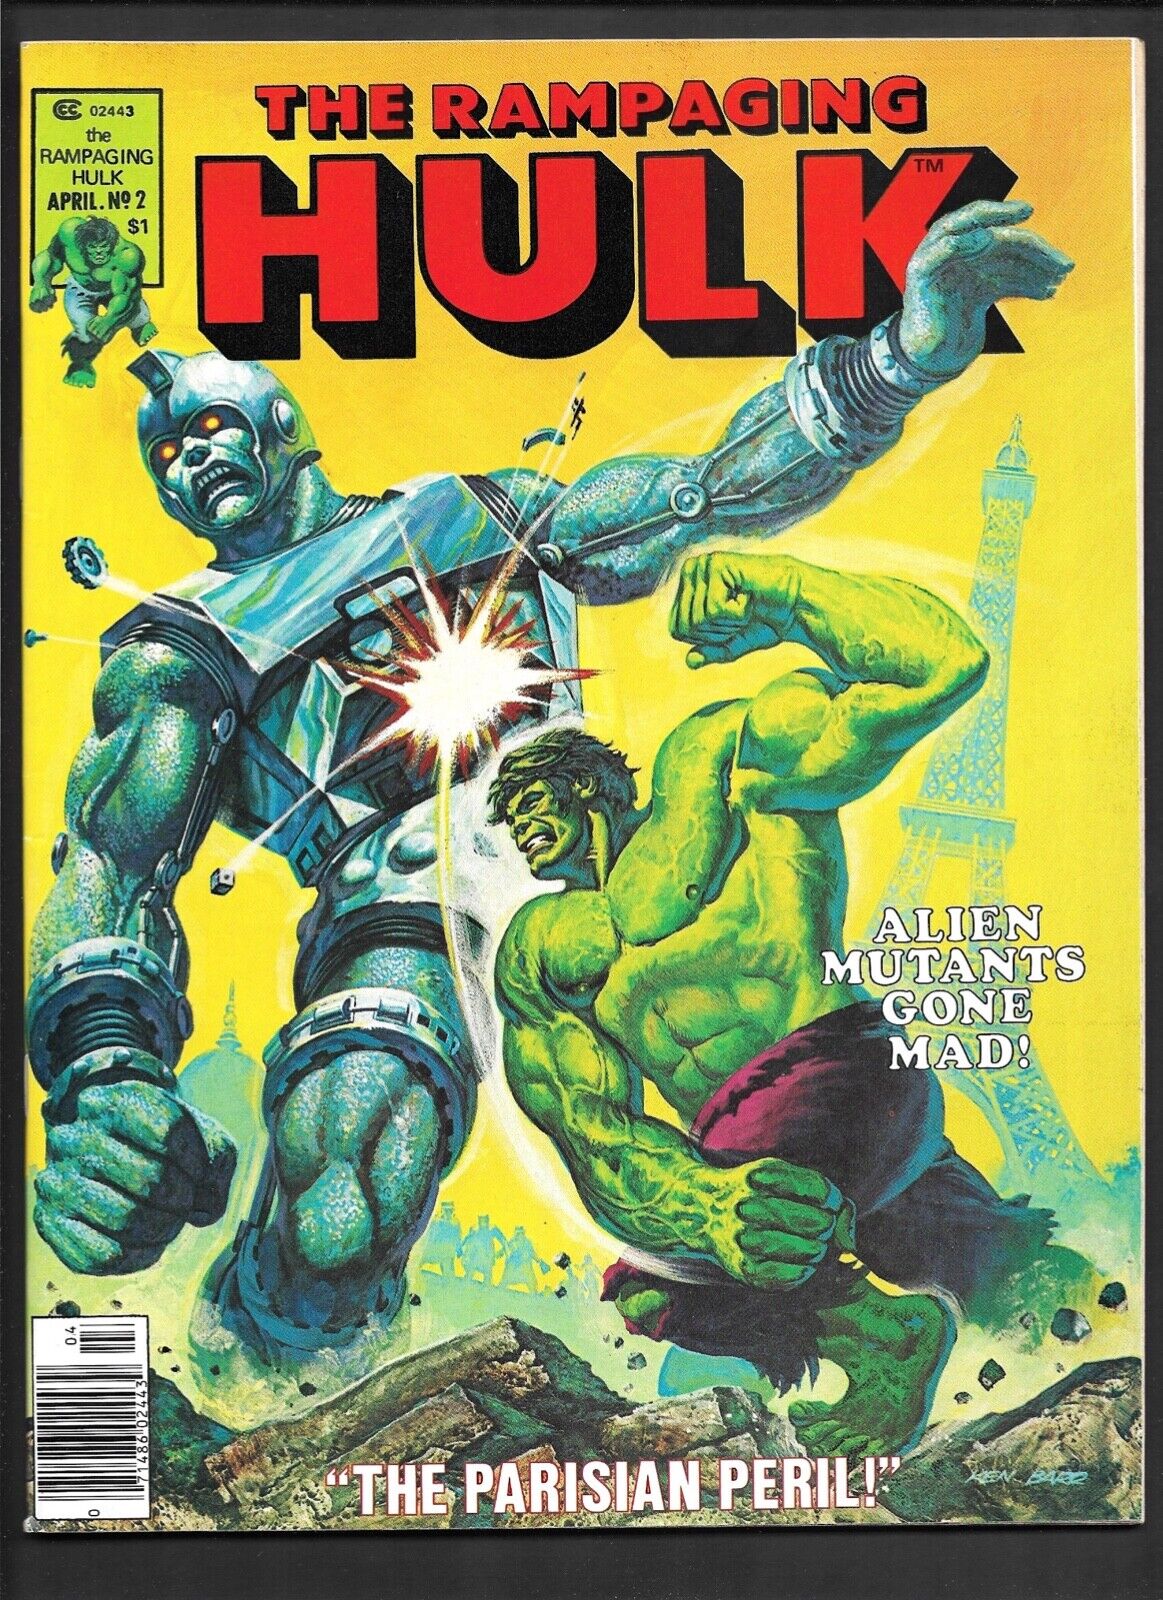 The Rampaging Hulk #2 (1977): Curtis (Marvel) Magazine Ken Barr Cover VF/NM